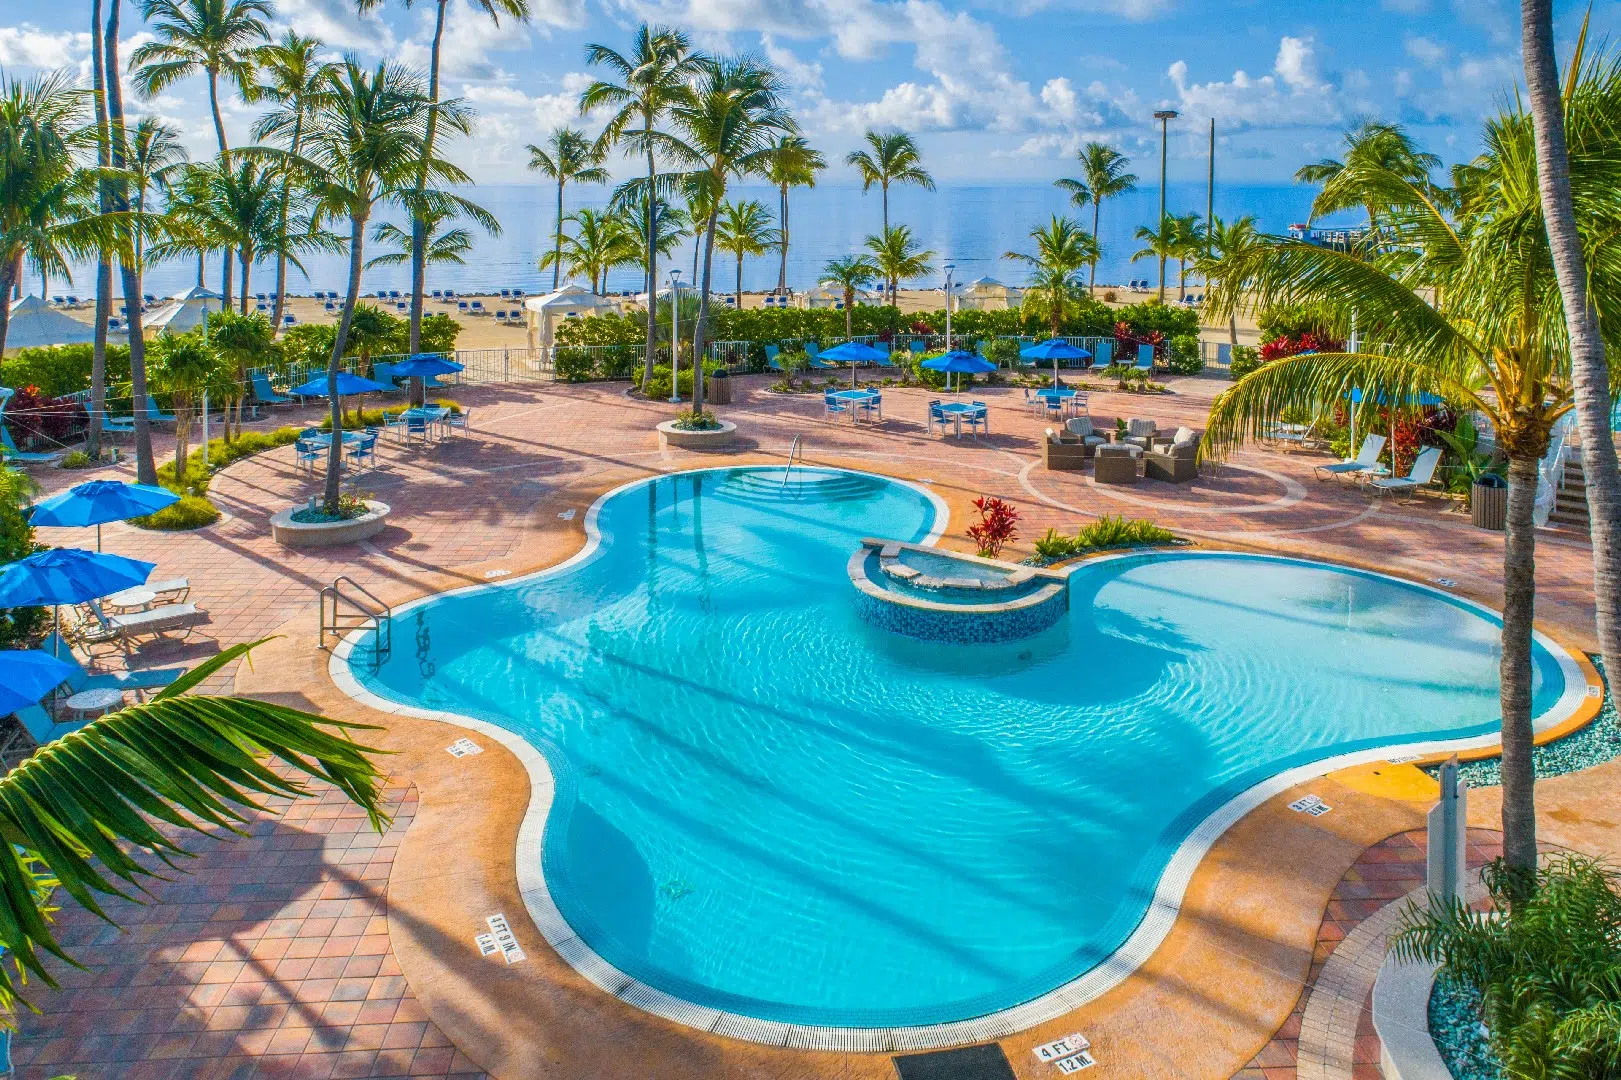 Islander Resort Islamorada Pool area